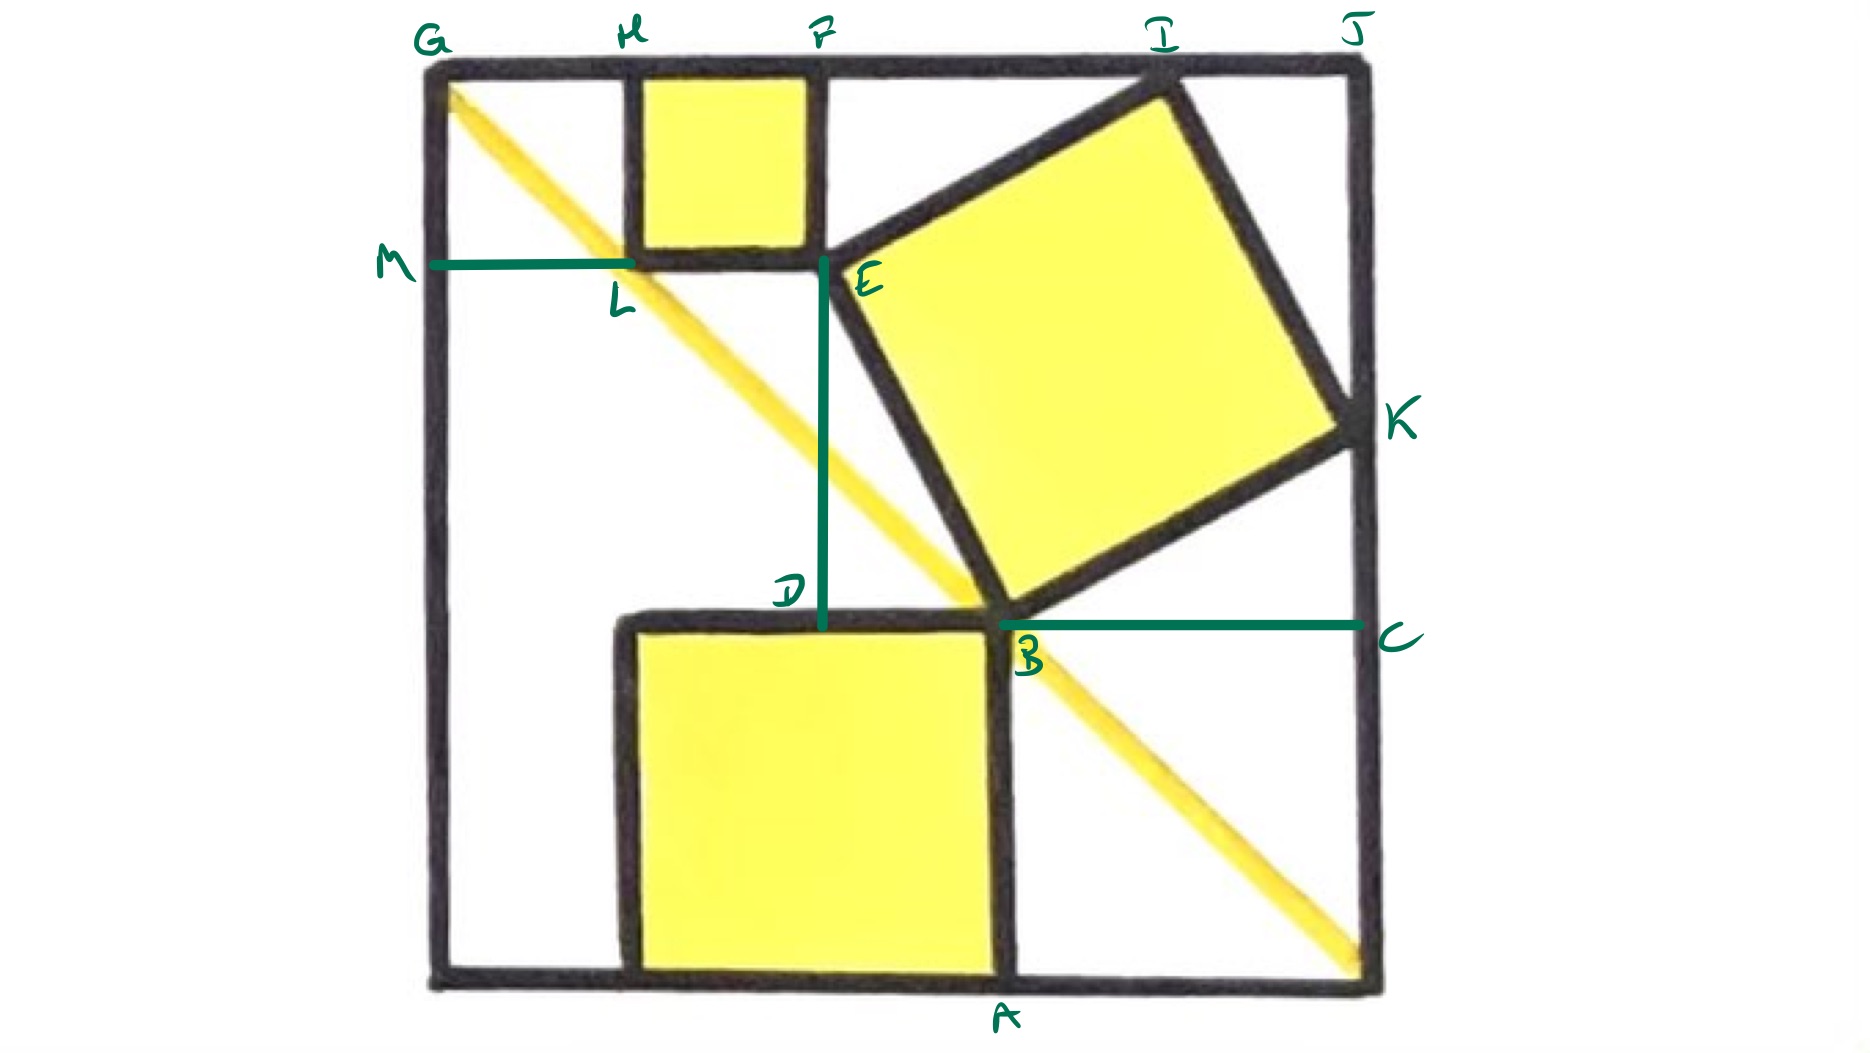 Four squares viii labelled